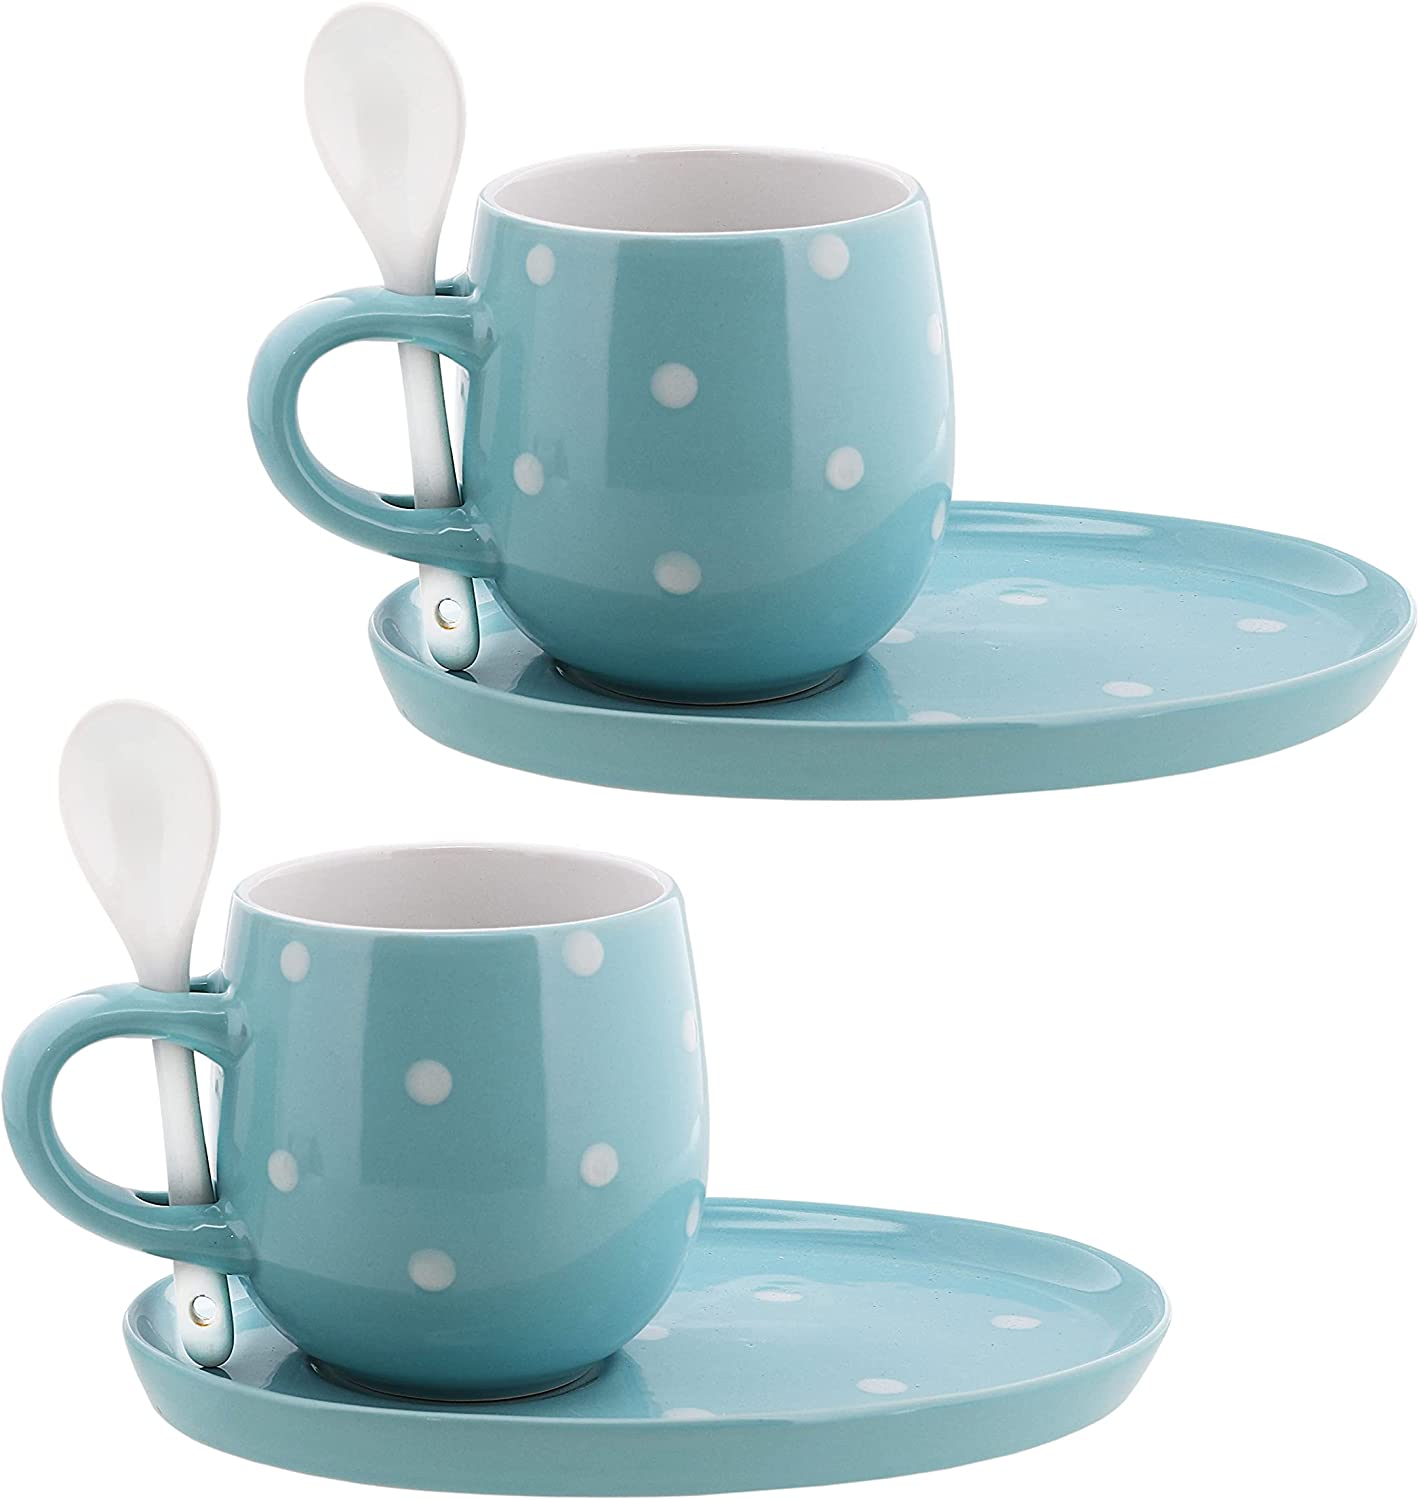 Servette Home Polka Dot Coffee Cups with Oblong Plate Dessert Set of 4  Orange - 11oz